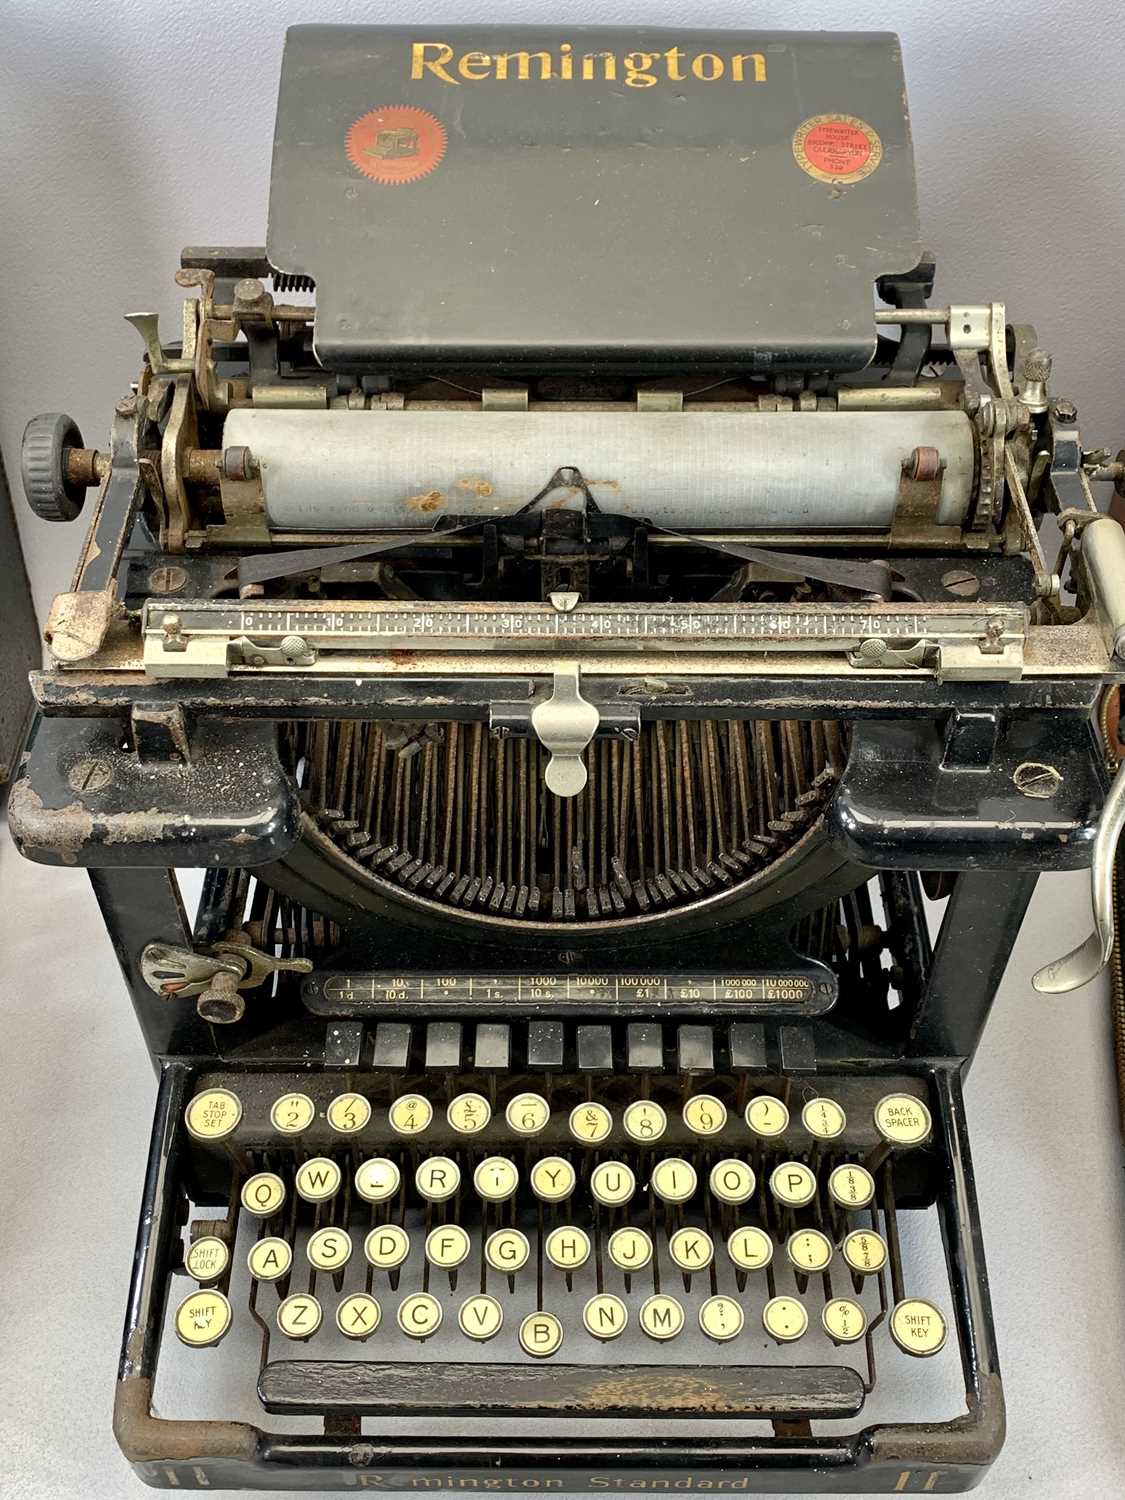 VINTAGE REMINGTON STANDARD TYPEWRITER, a vintage Imperial 'The Good Companion' portable typewriter - Image 4 of 6